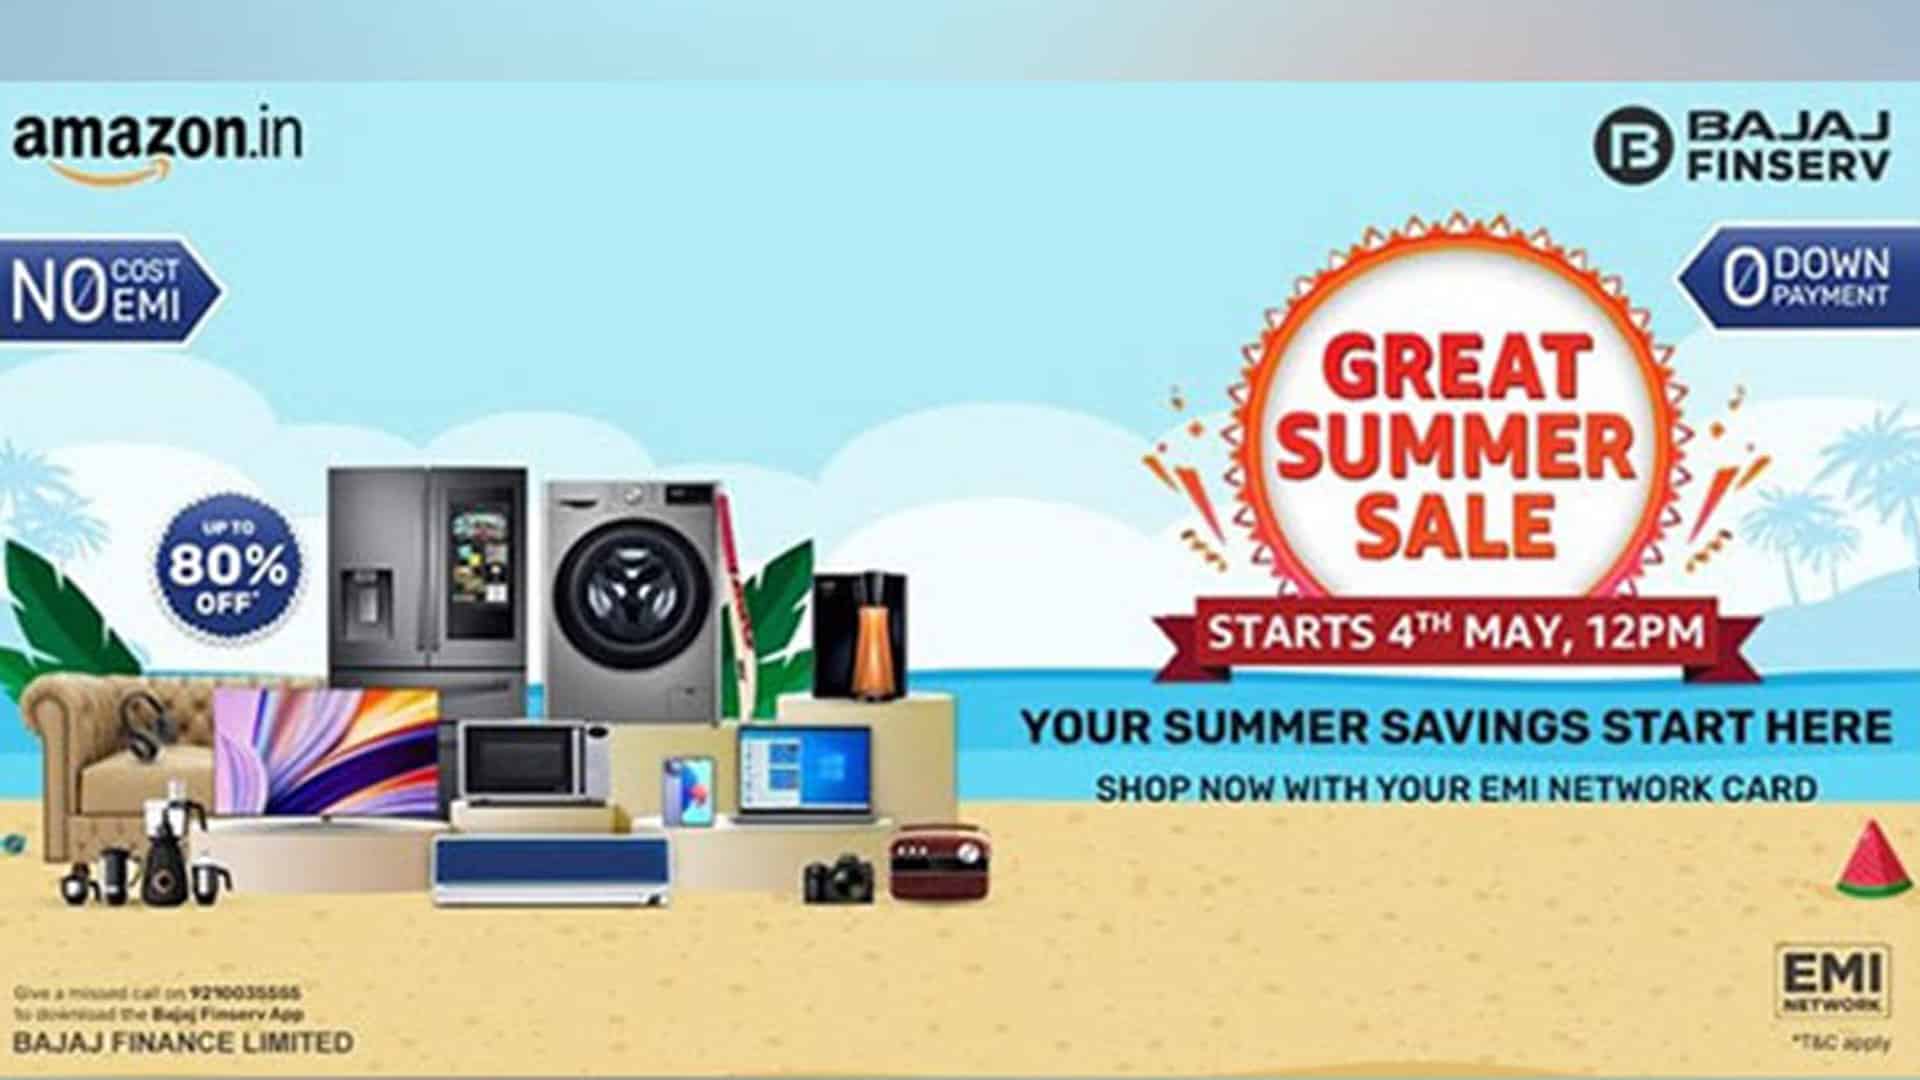 Amazon Great Summer Sale - Exclusive No Cost EMI Offers on Bajaj Finserv EMI Network Card